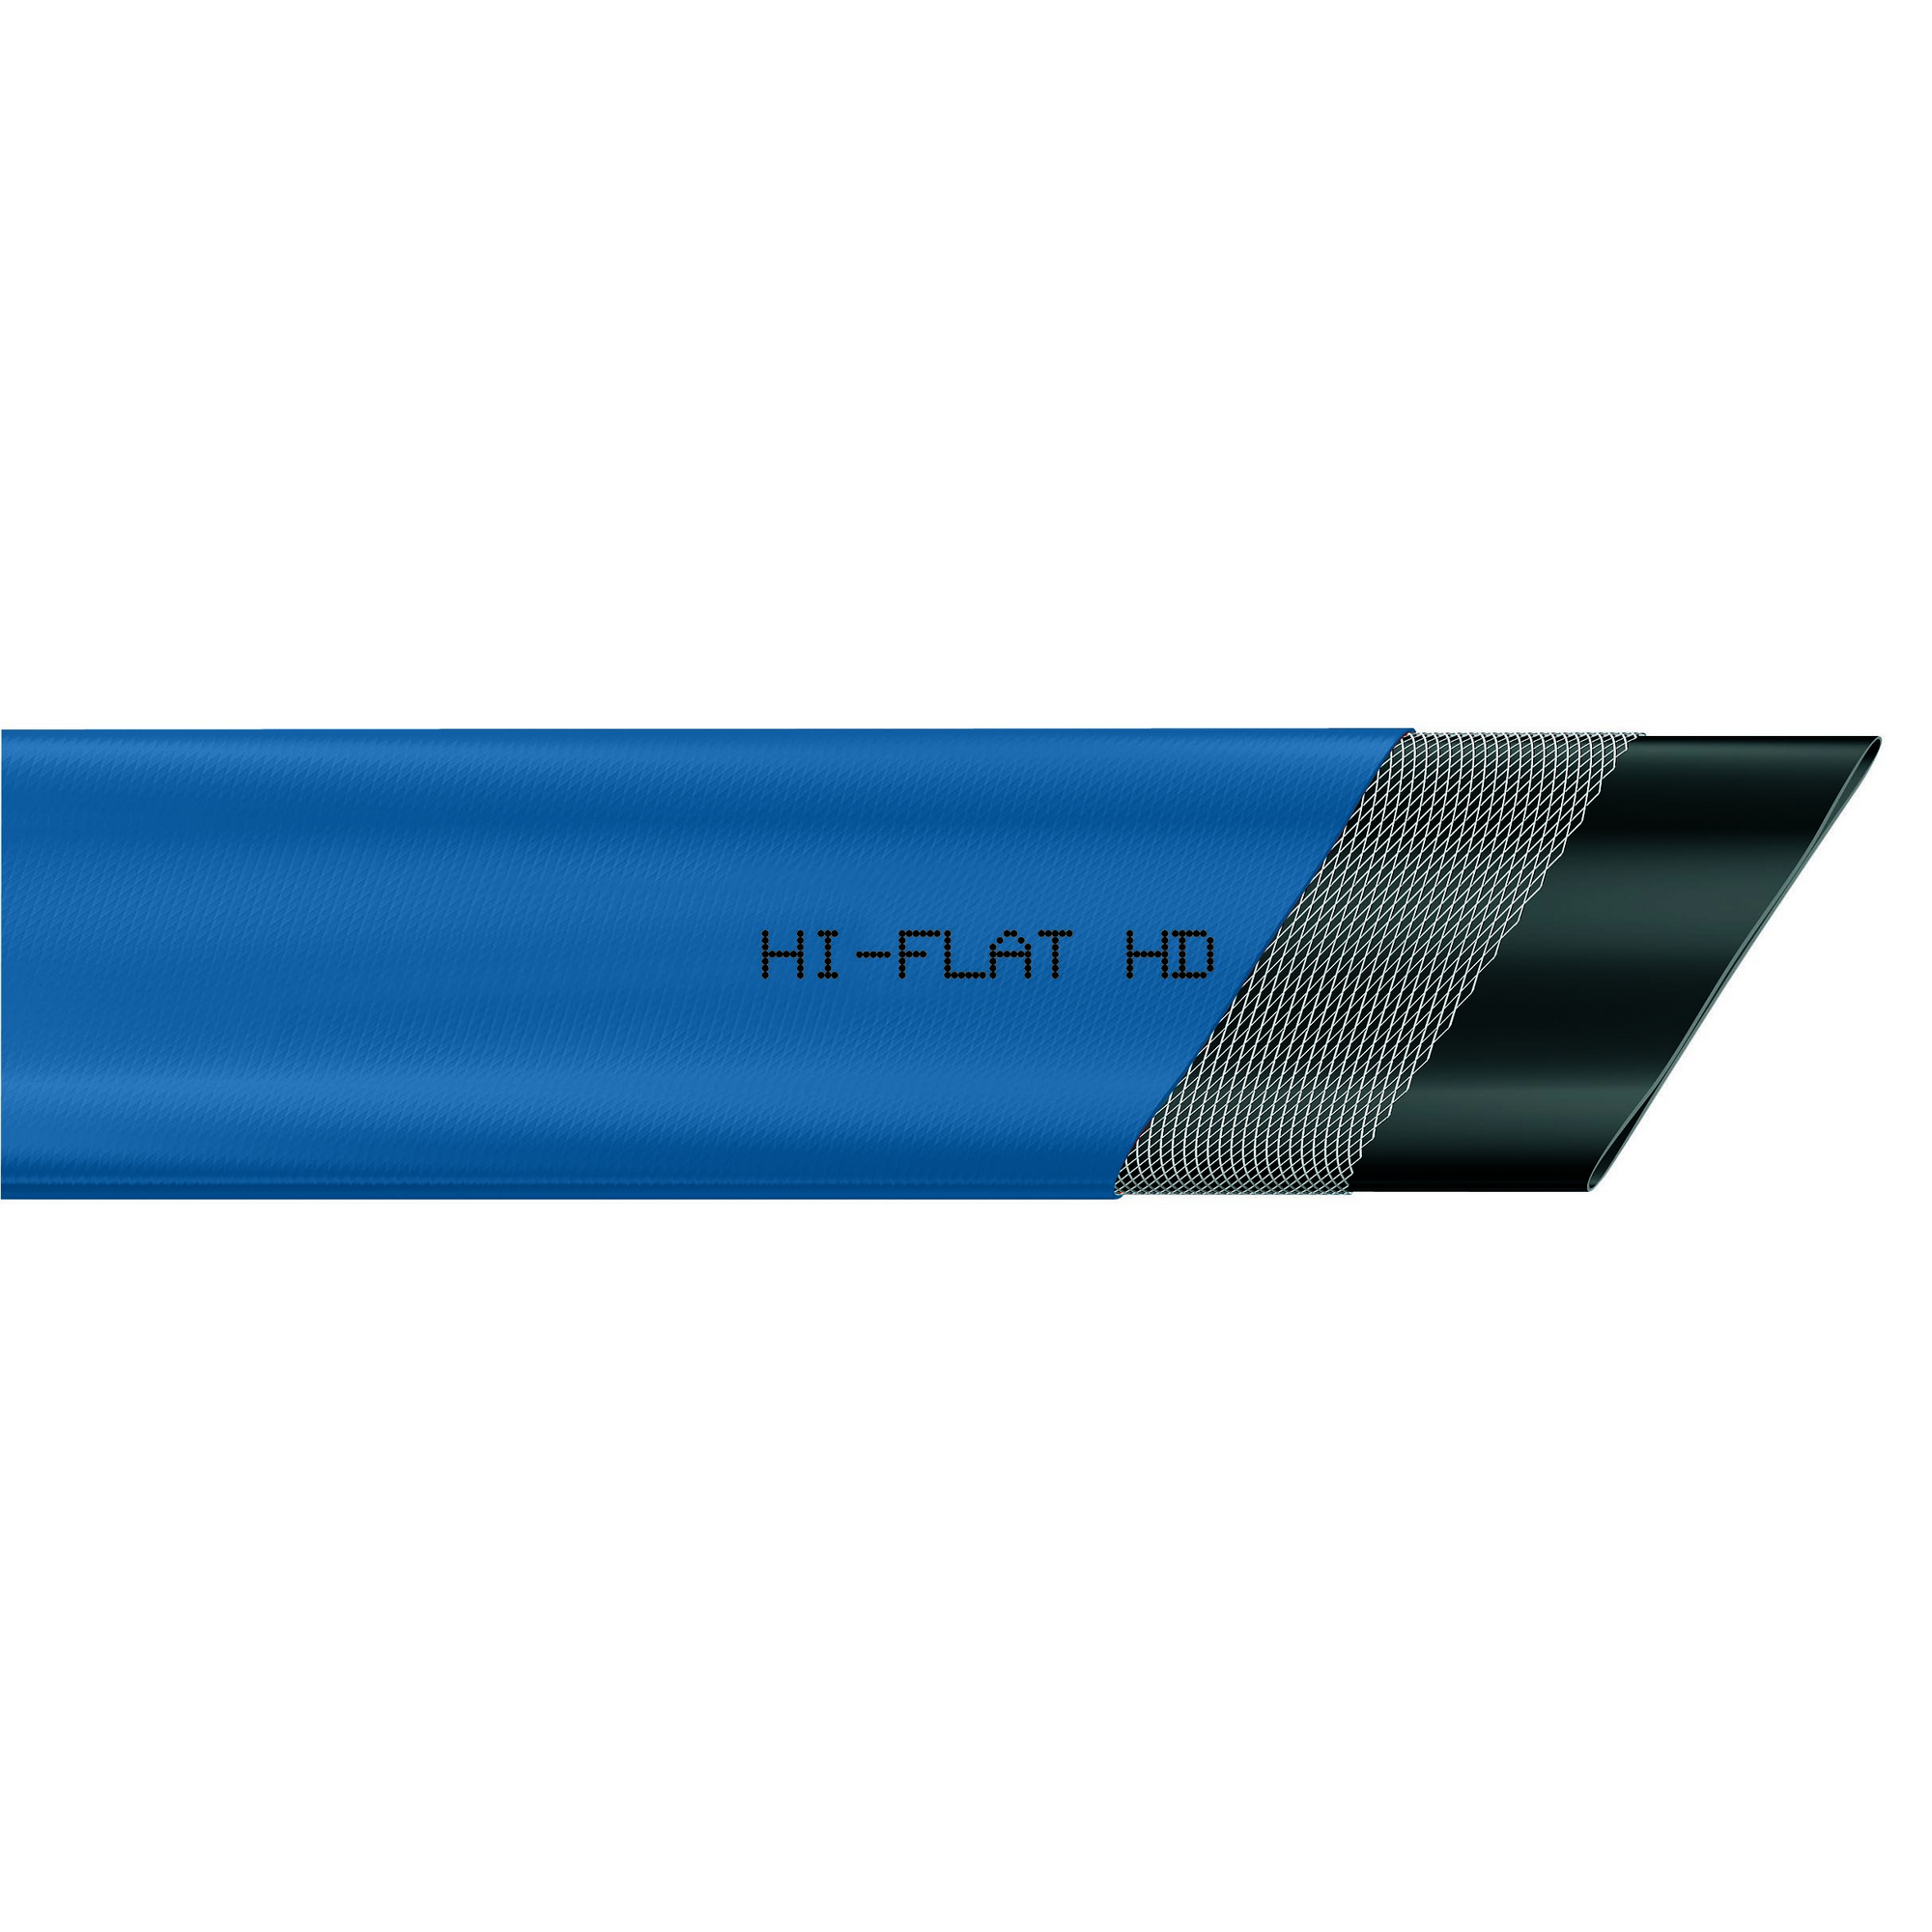 Flachschlauch 'Hi-Flat HD' blau, Ø 25 mm + product picture